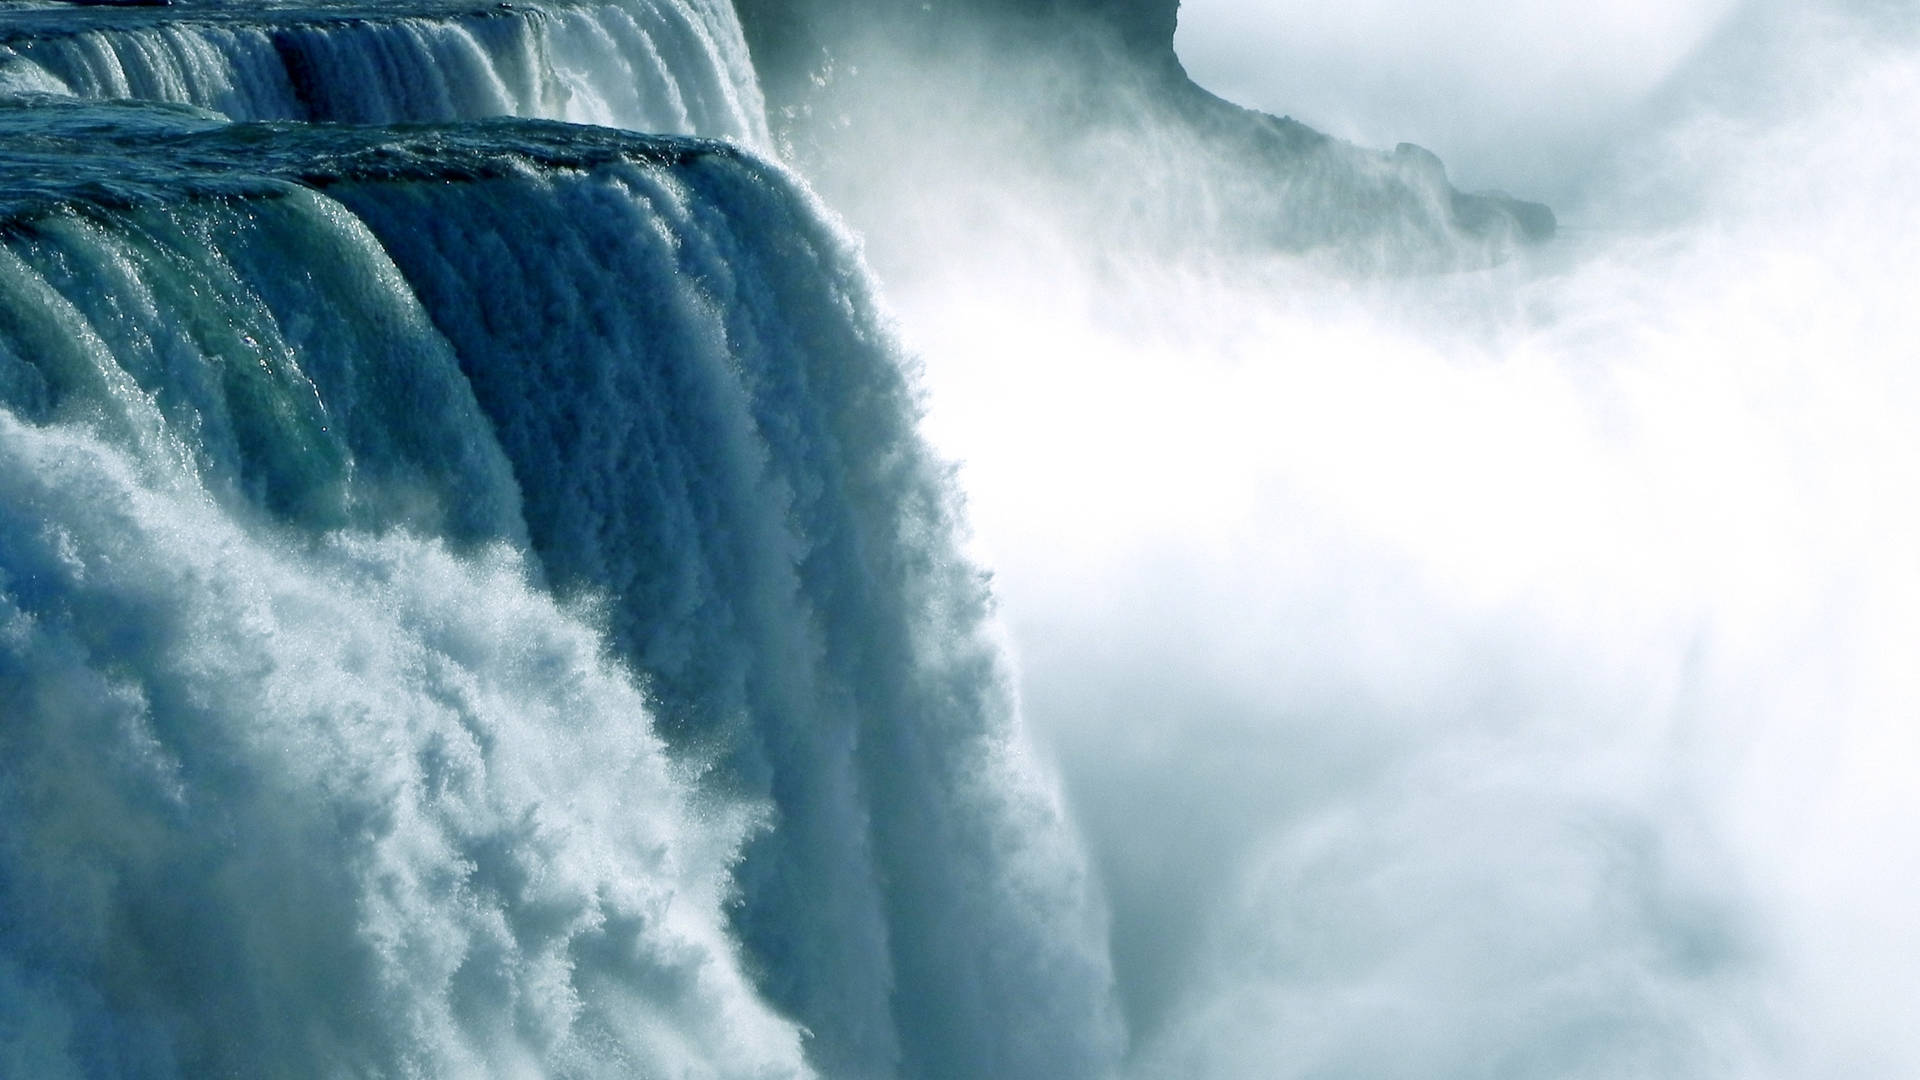 Niagara Falls 2560X1440 Wallpaper and Background Image